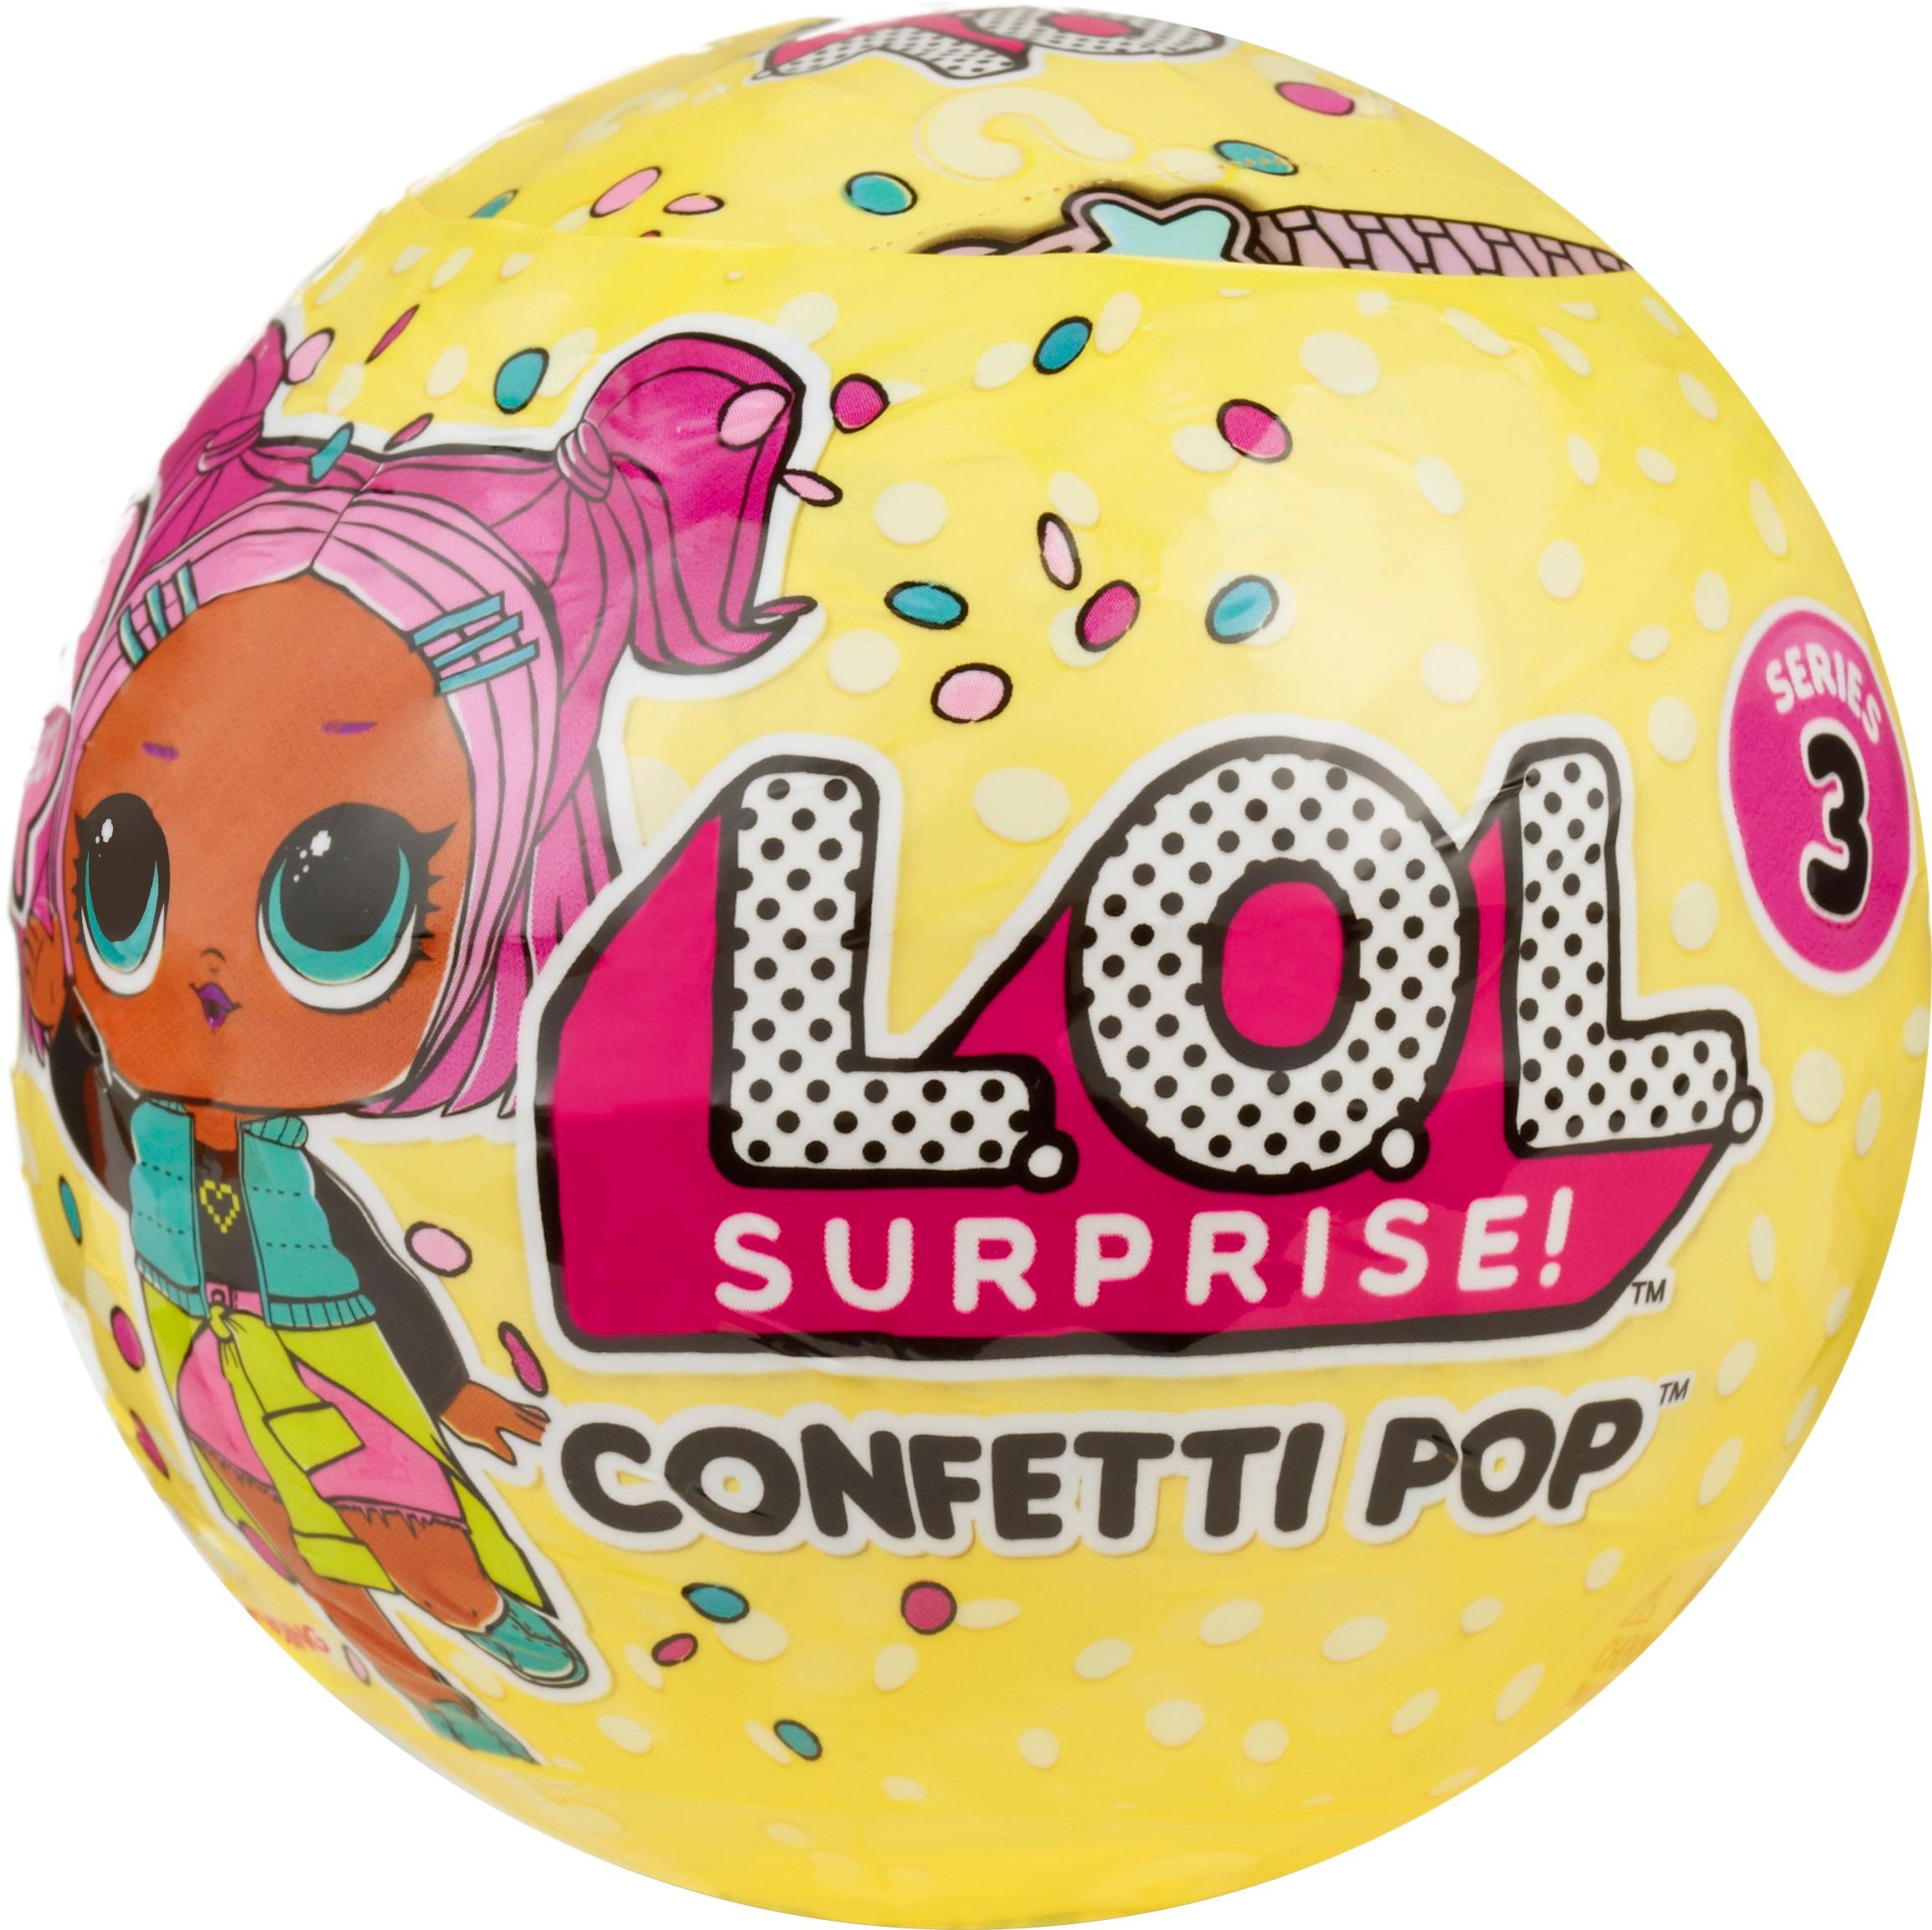 lol surprise dolls confetti pop